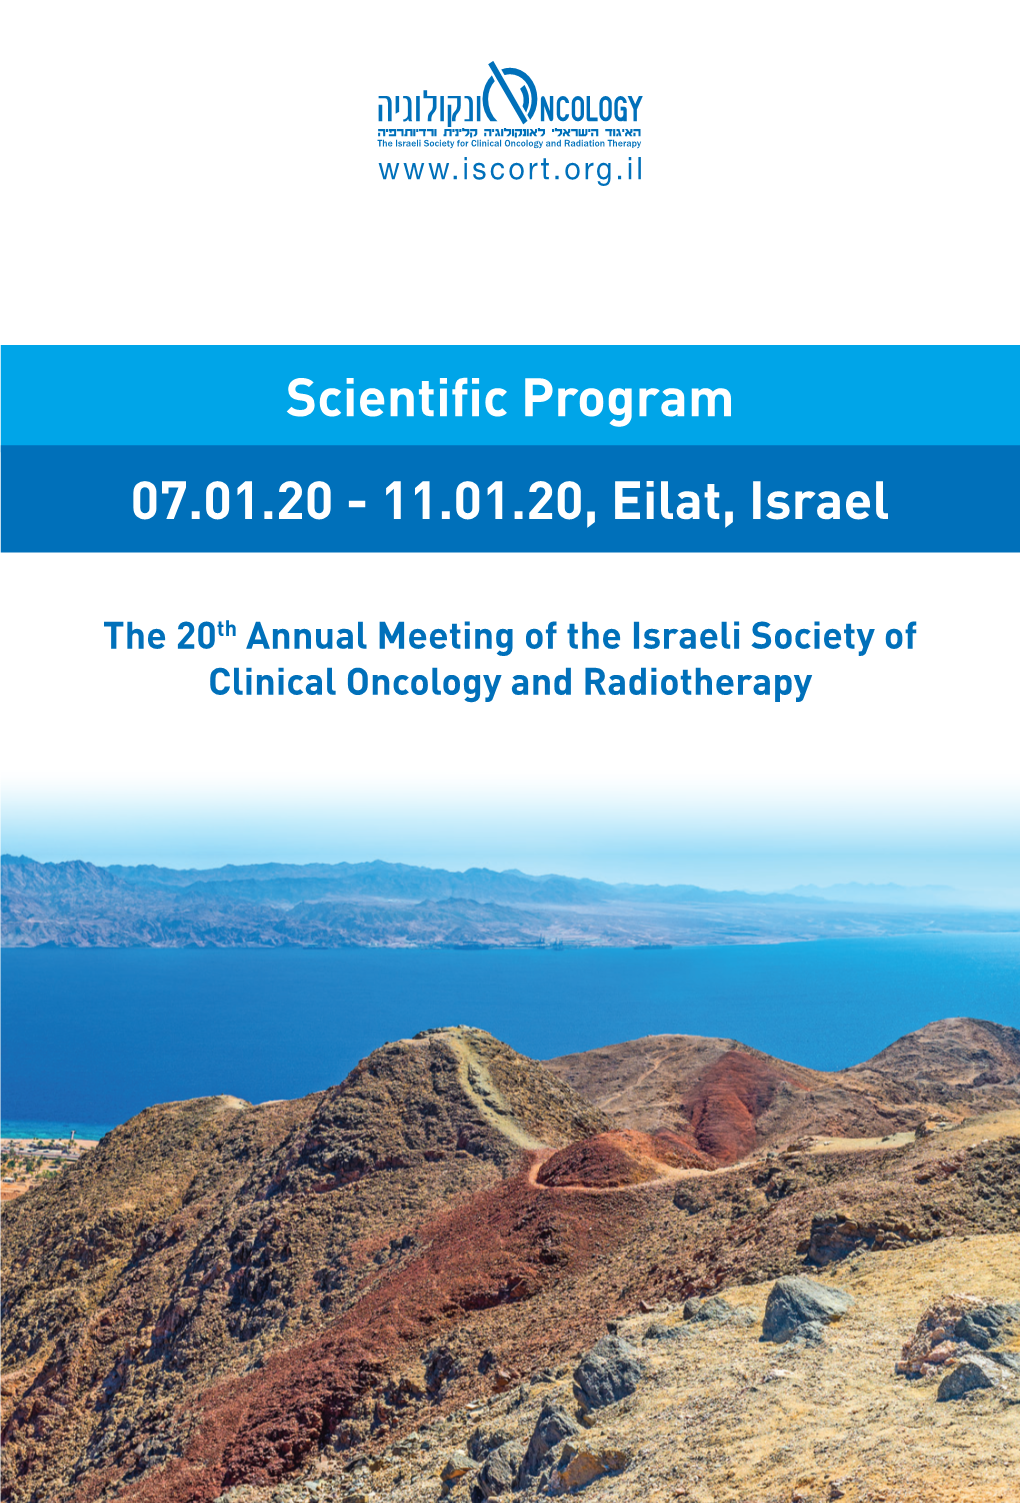 Scientific Program 07.01.20 - 11.01.20, Eilat, Israel